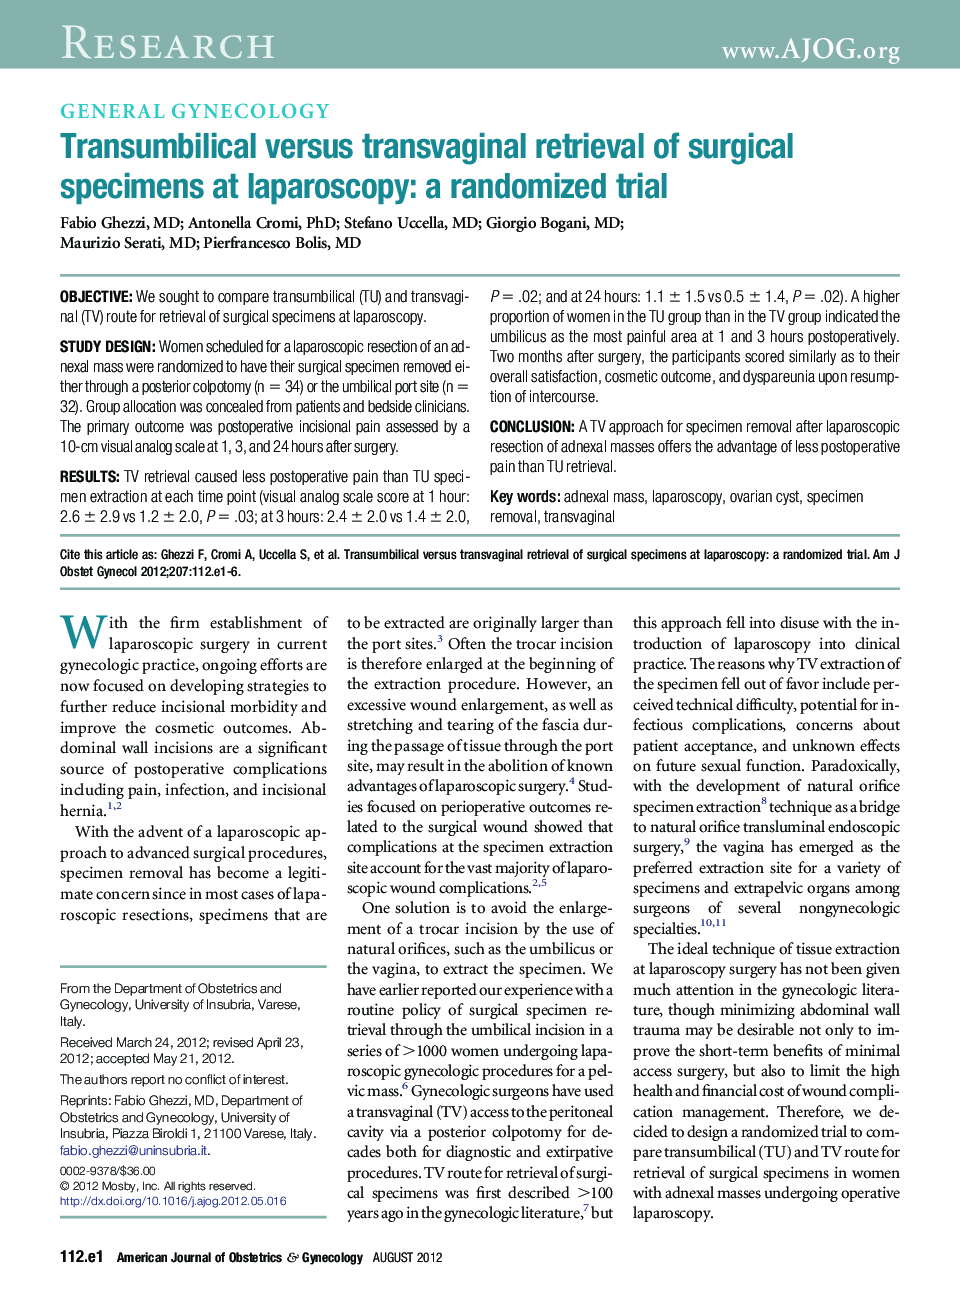 Transumbilical versus transvaginal retrieval of surgical specimens at laparoscopy: a randomized trial